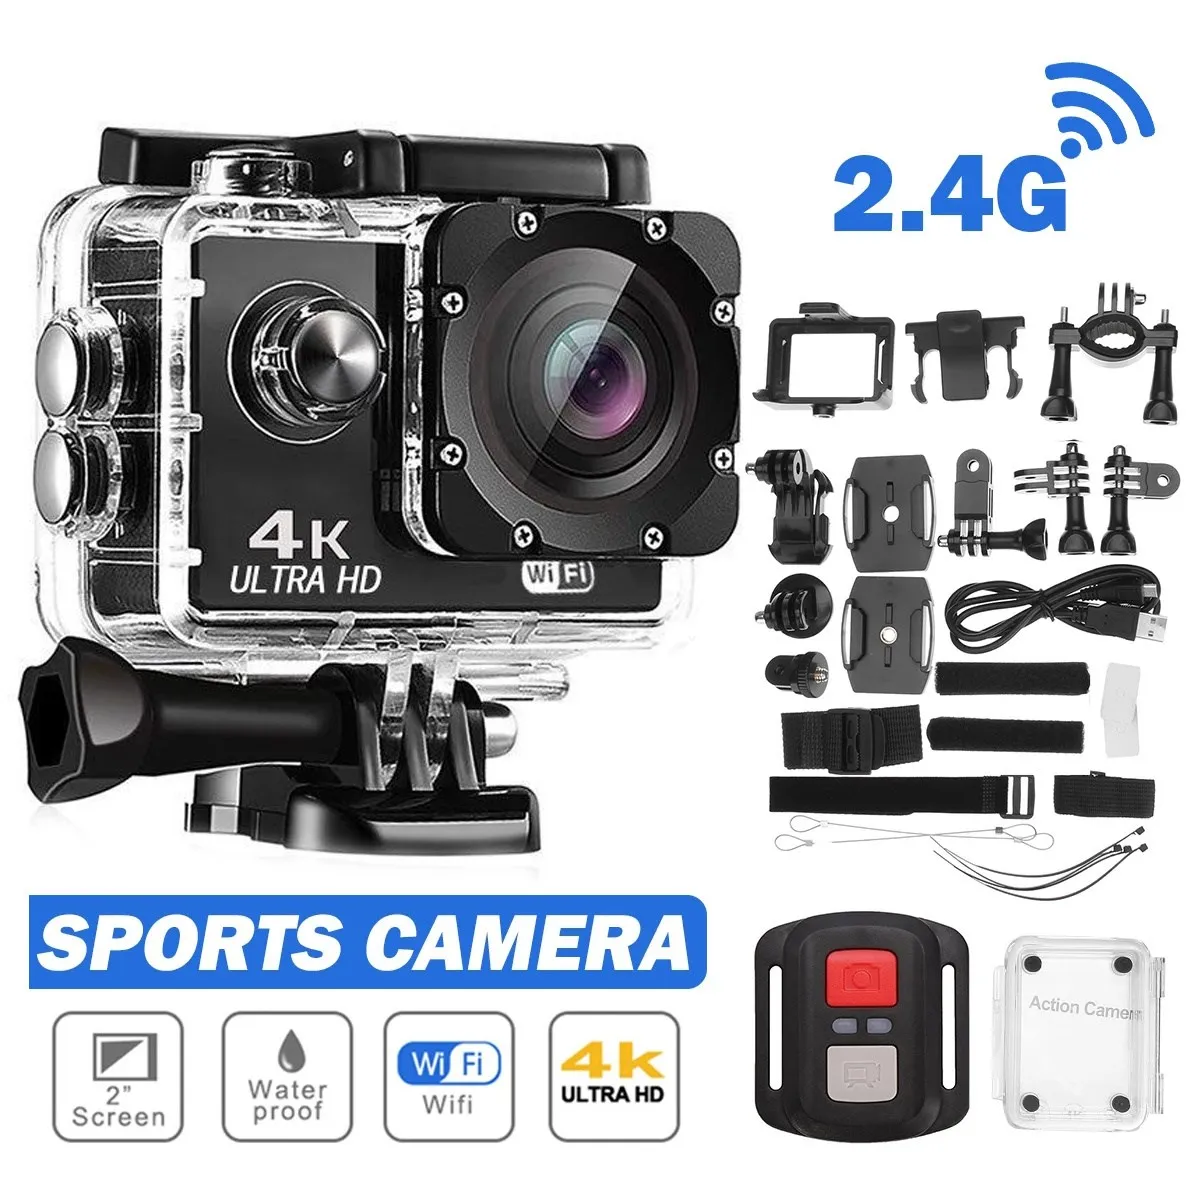 Купи New 4k HD Mini Action Camera 2.0” Screen WiFi Remote Control Sport Camera Underwater Waterproof Helmet Video Recording Cameras за 1,651 рублей в магазине AliExpress